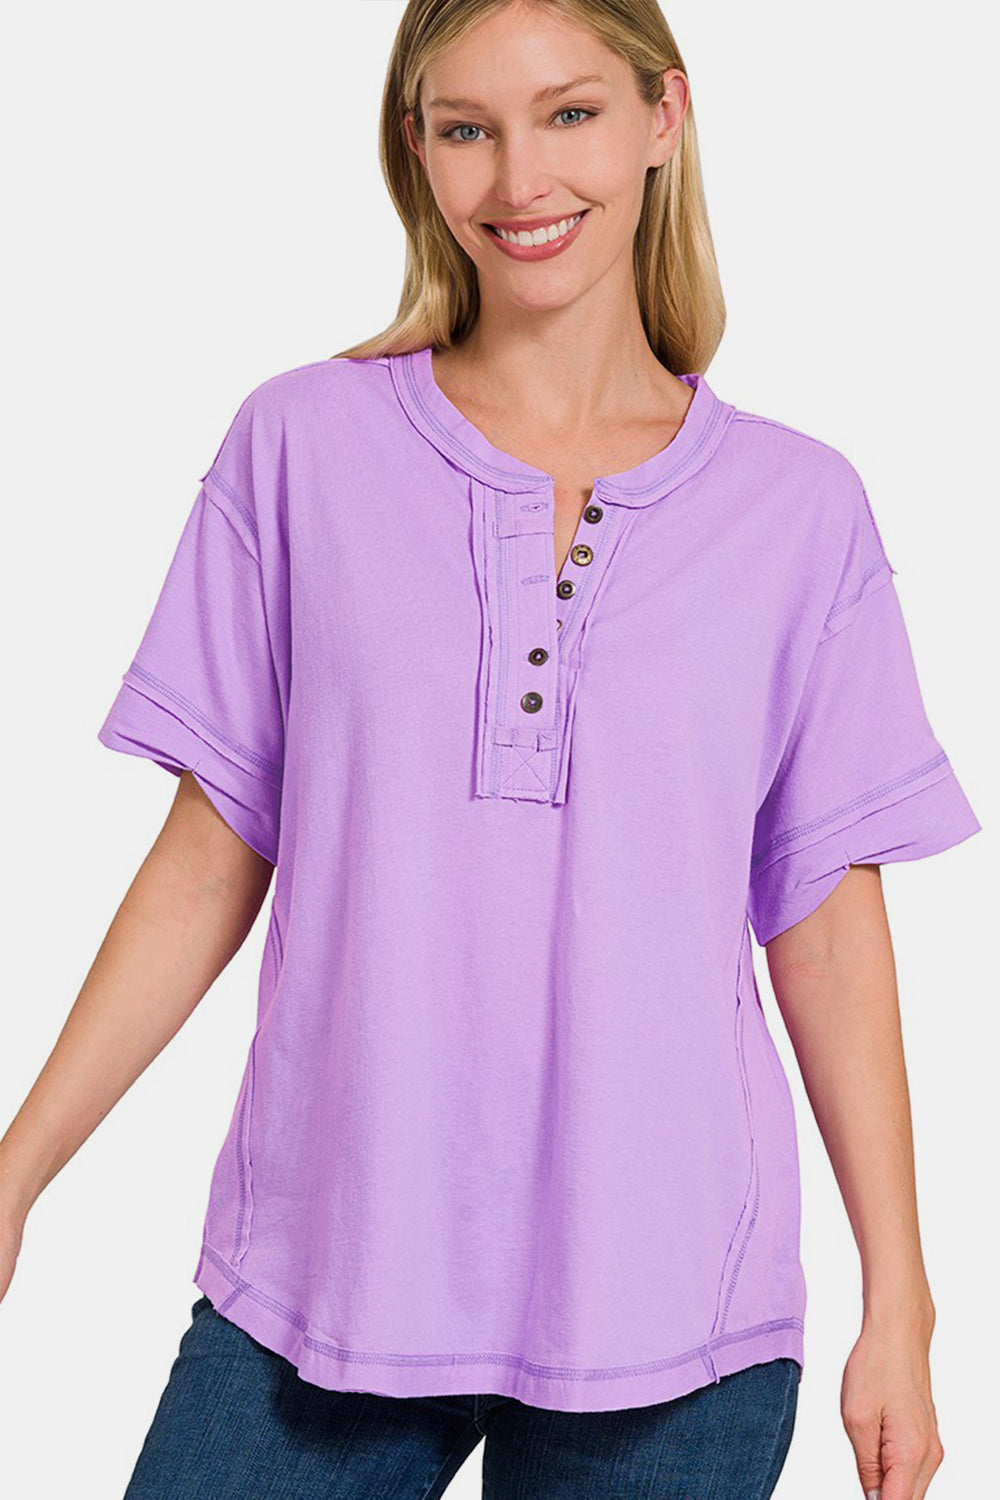 Zenana Exposed Seam Half Button Short Sleeve Top - Lavender